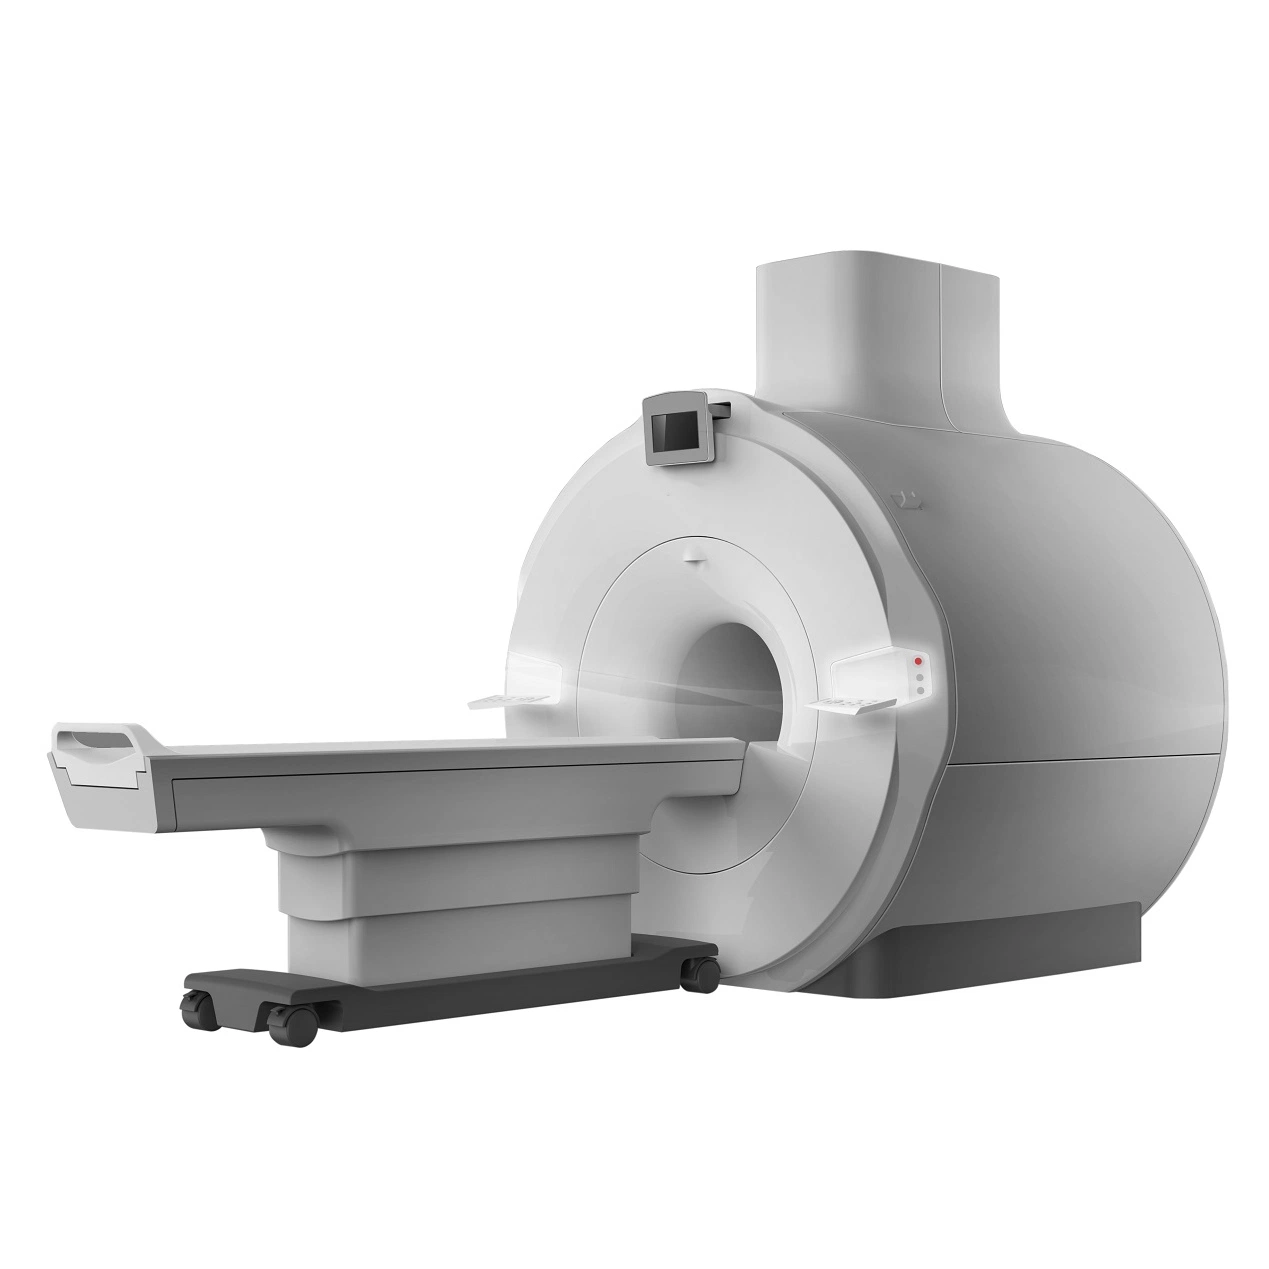 SYP Hospital Medical 0.5t 1.5t 3t MRI Scanner/Scan/Machine Equipment Price (Цена томографа/сканера/оборудования для установки С пленкой МРТ